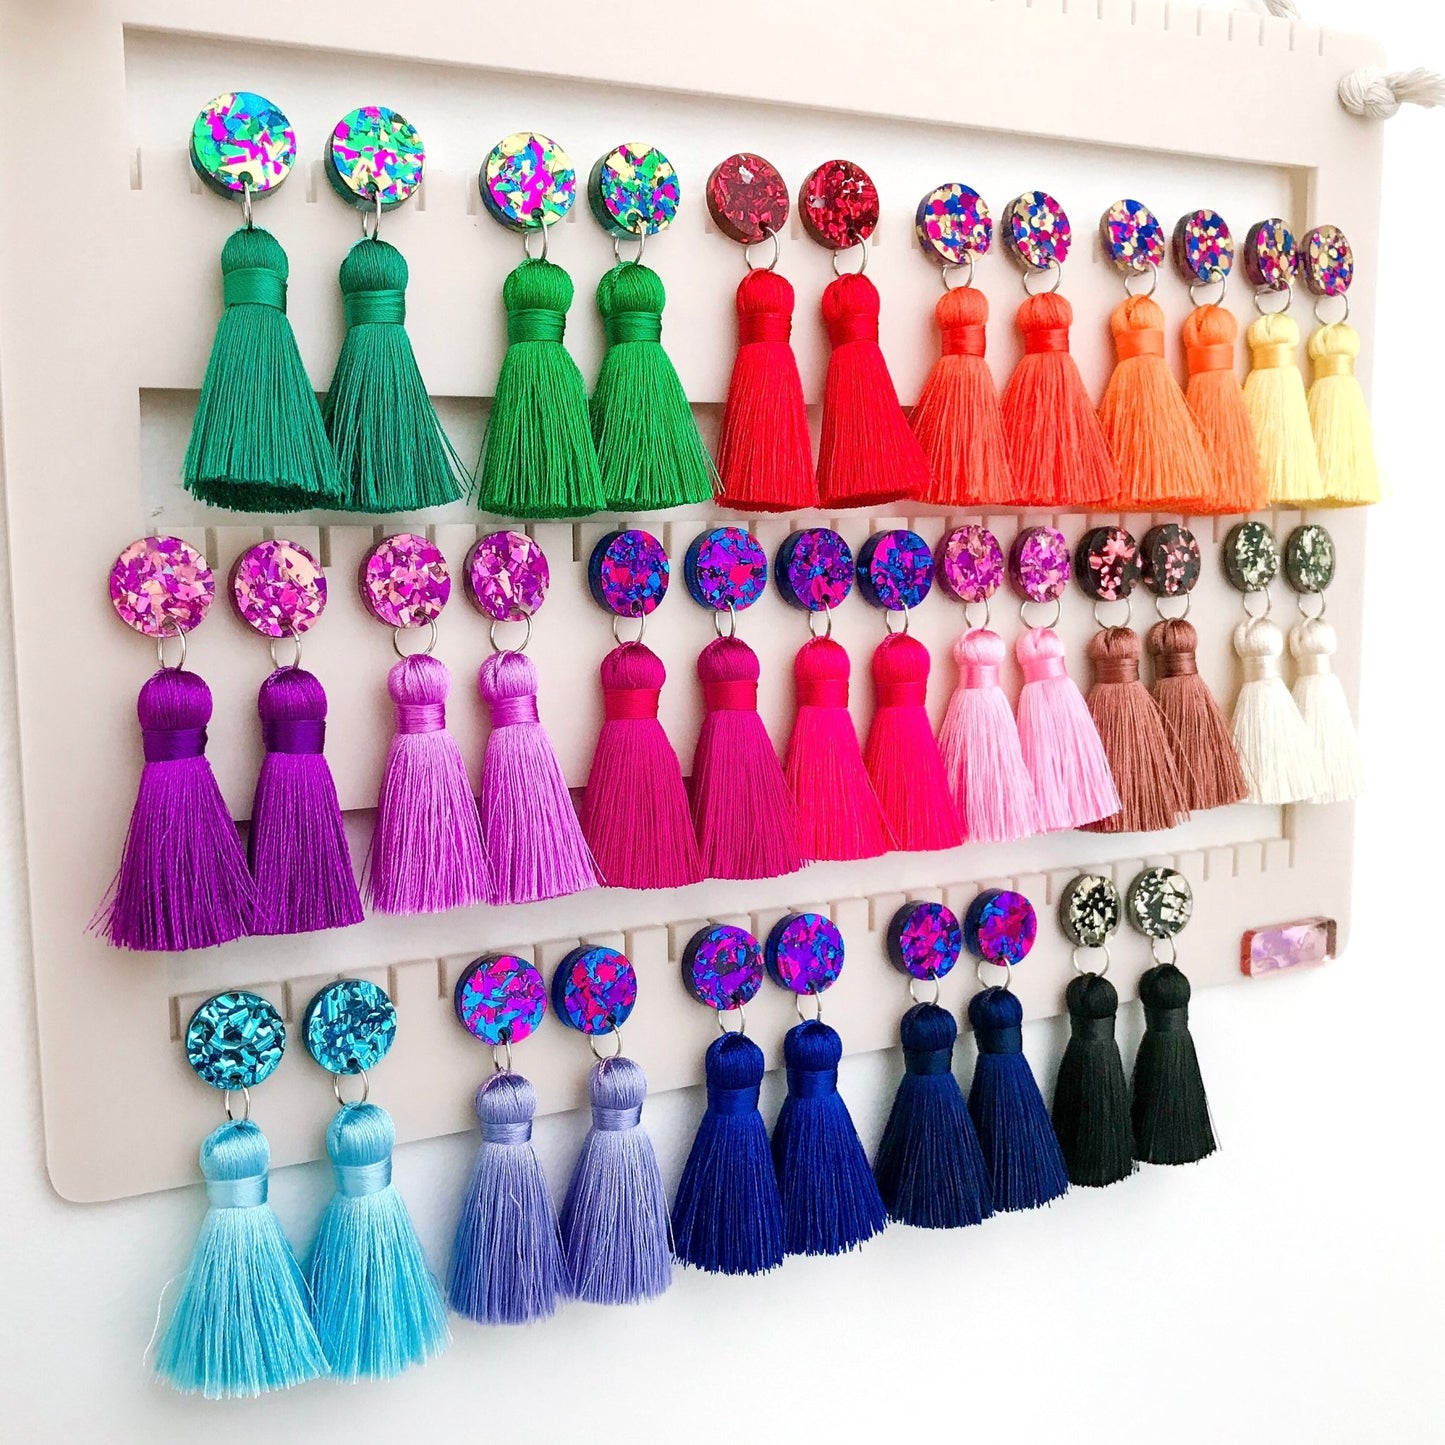 Large Silk Tassel Earrings - Purple - Lacey Lou Sparkles